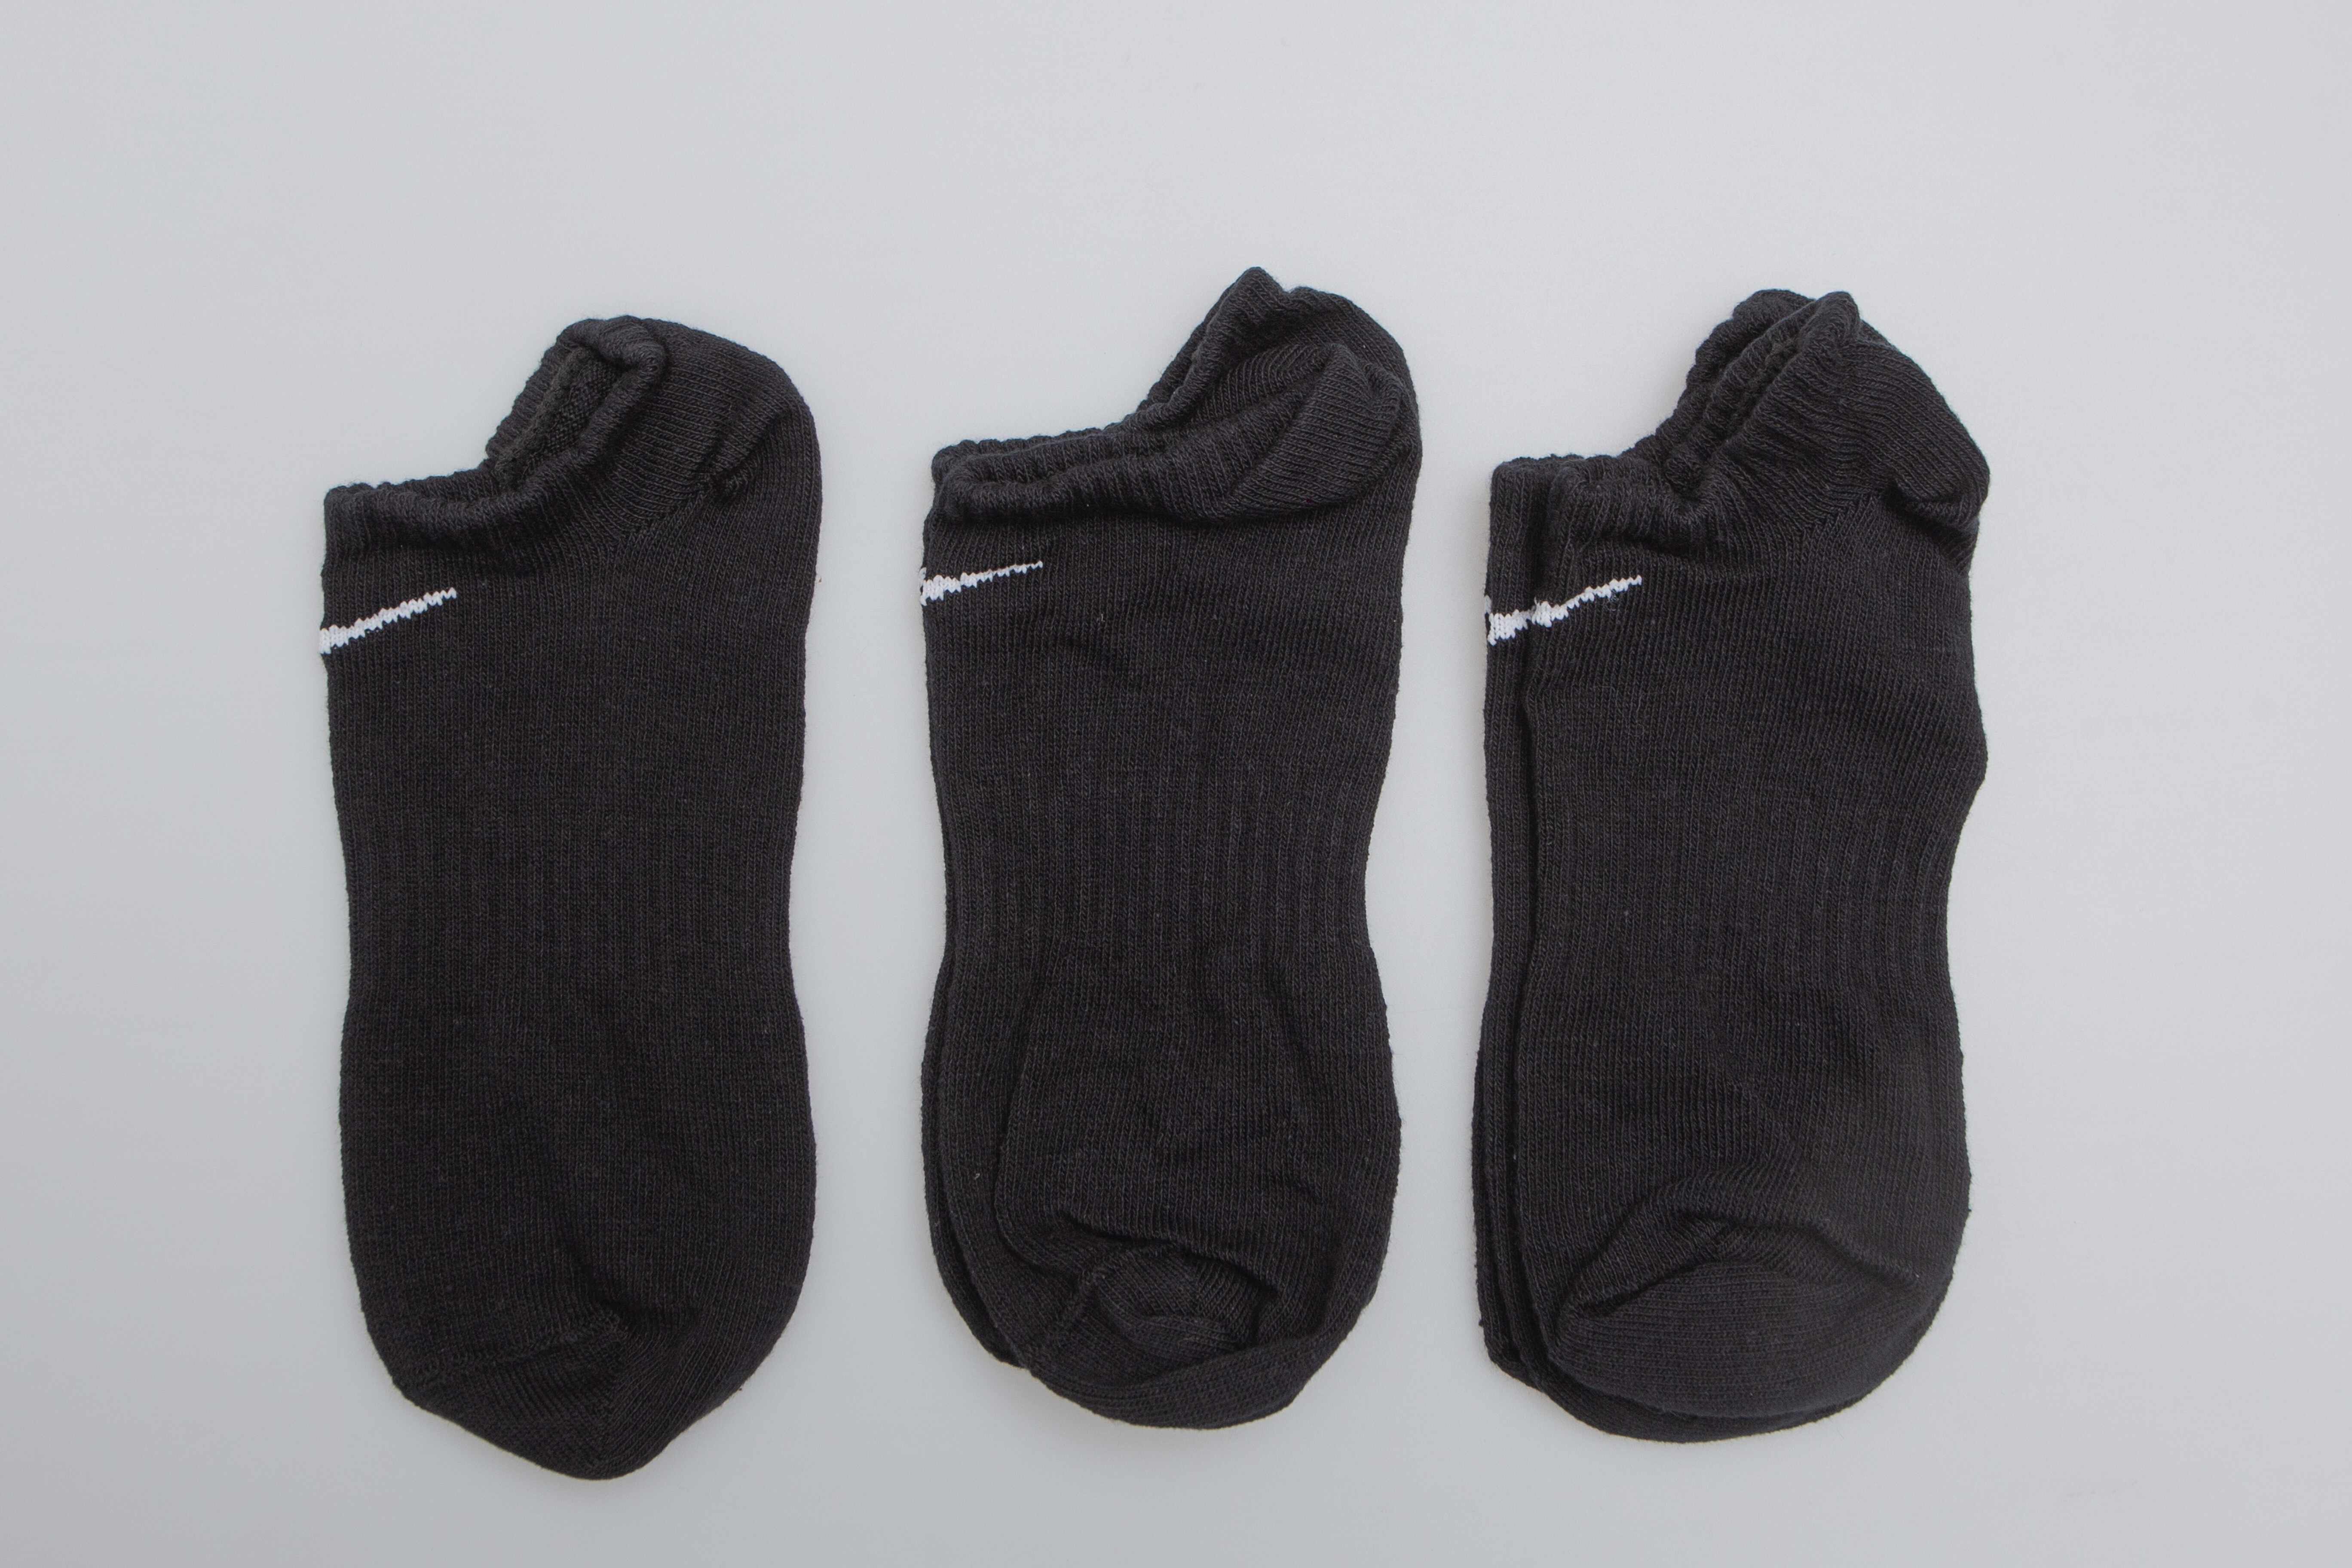 Everyday Lightweight No-show Socks (Pack of 3)